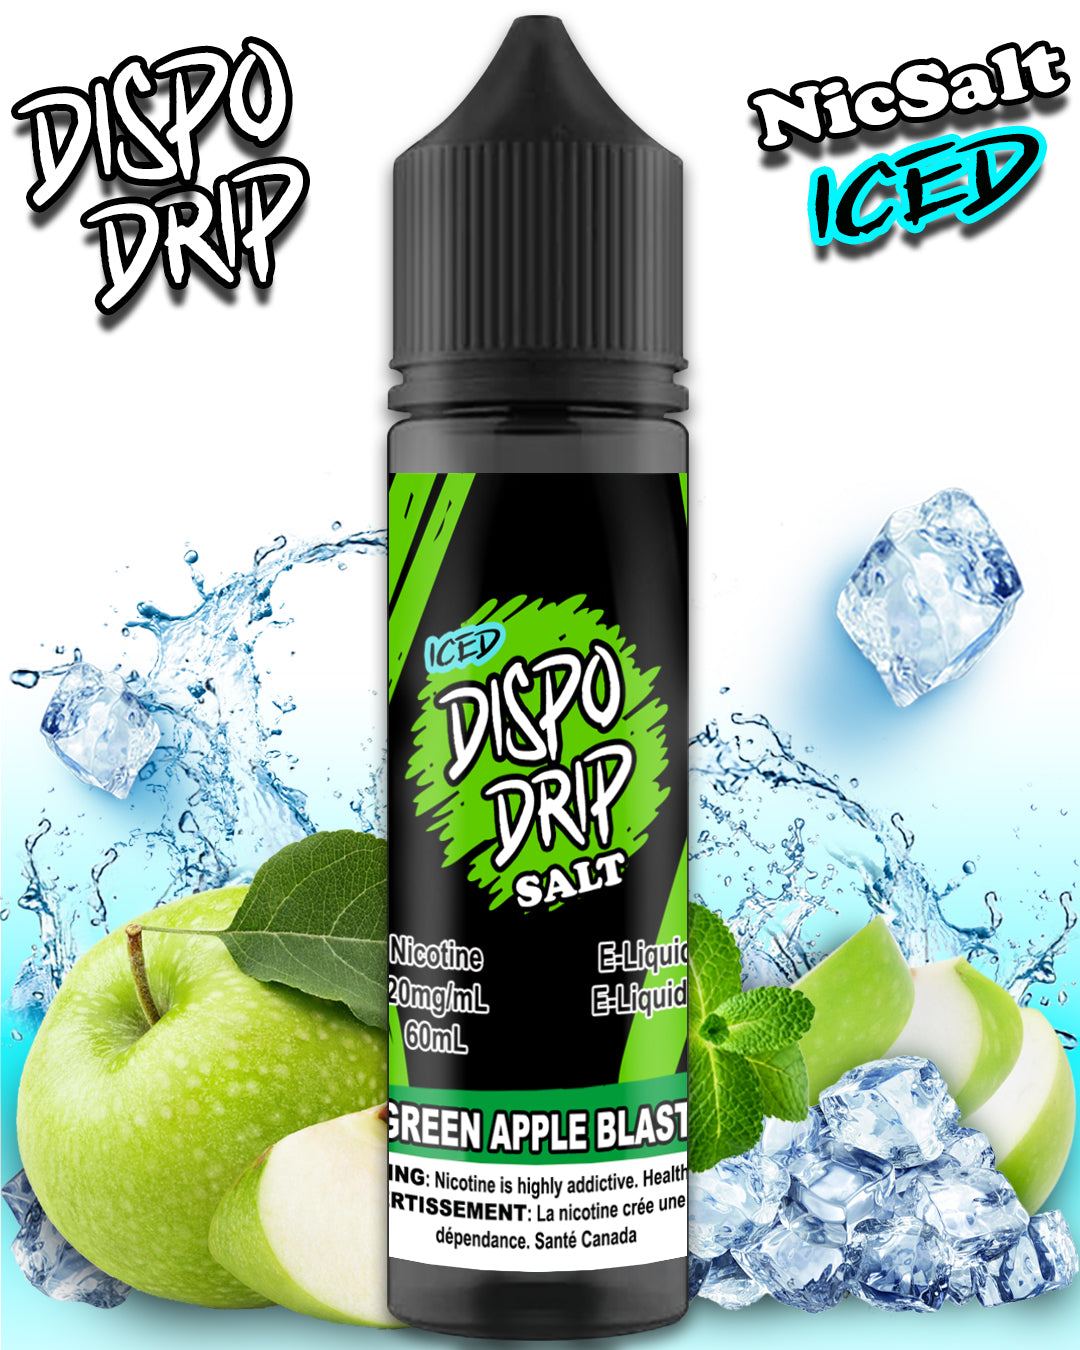 DISPO DRIP ICED - GREEN APPLE BLAST SALT